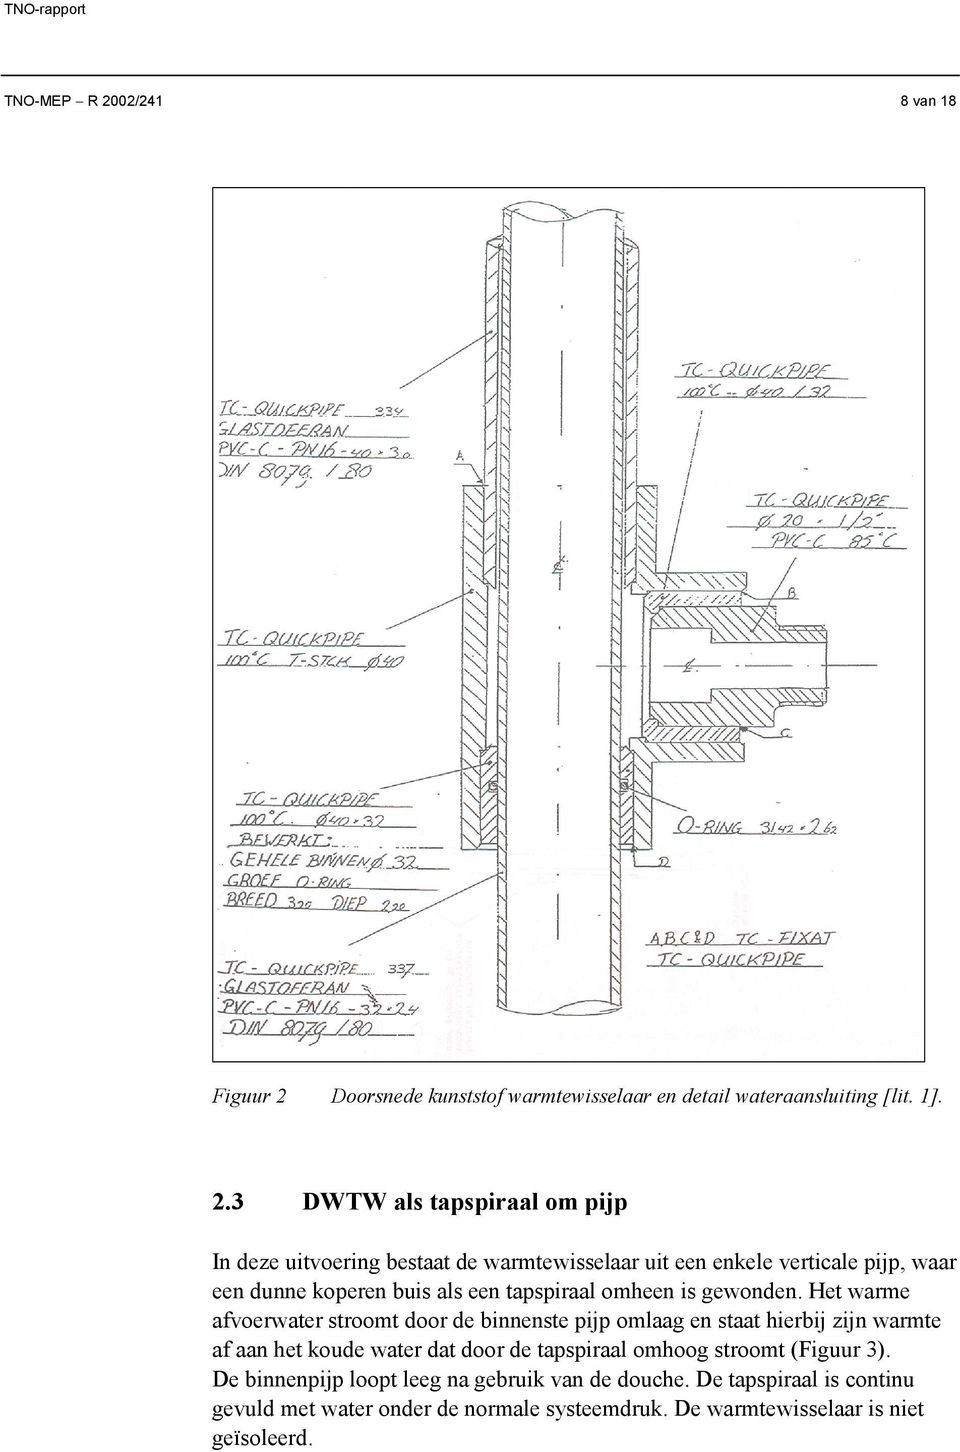 Doorsnede kunststof warmtewisselaar en detail wateraansluiting [lit. 1]. 2.